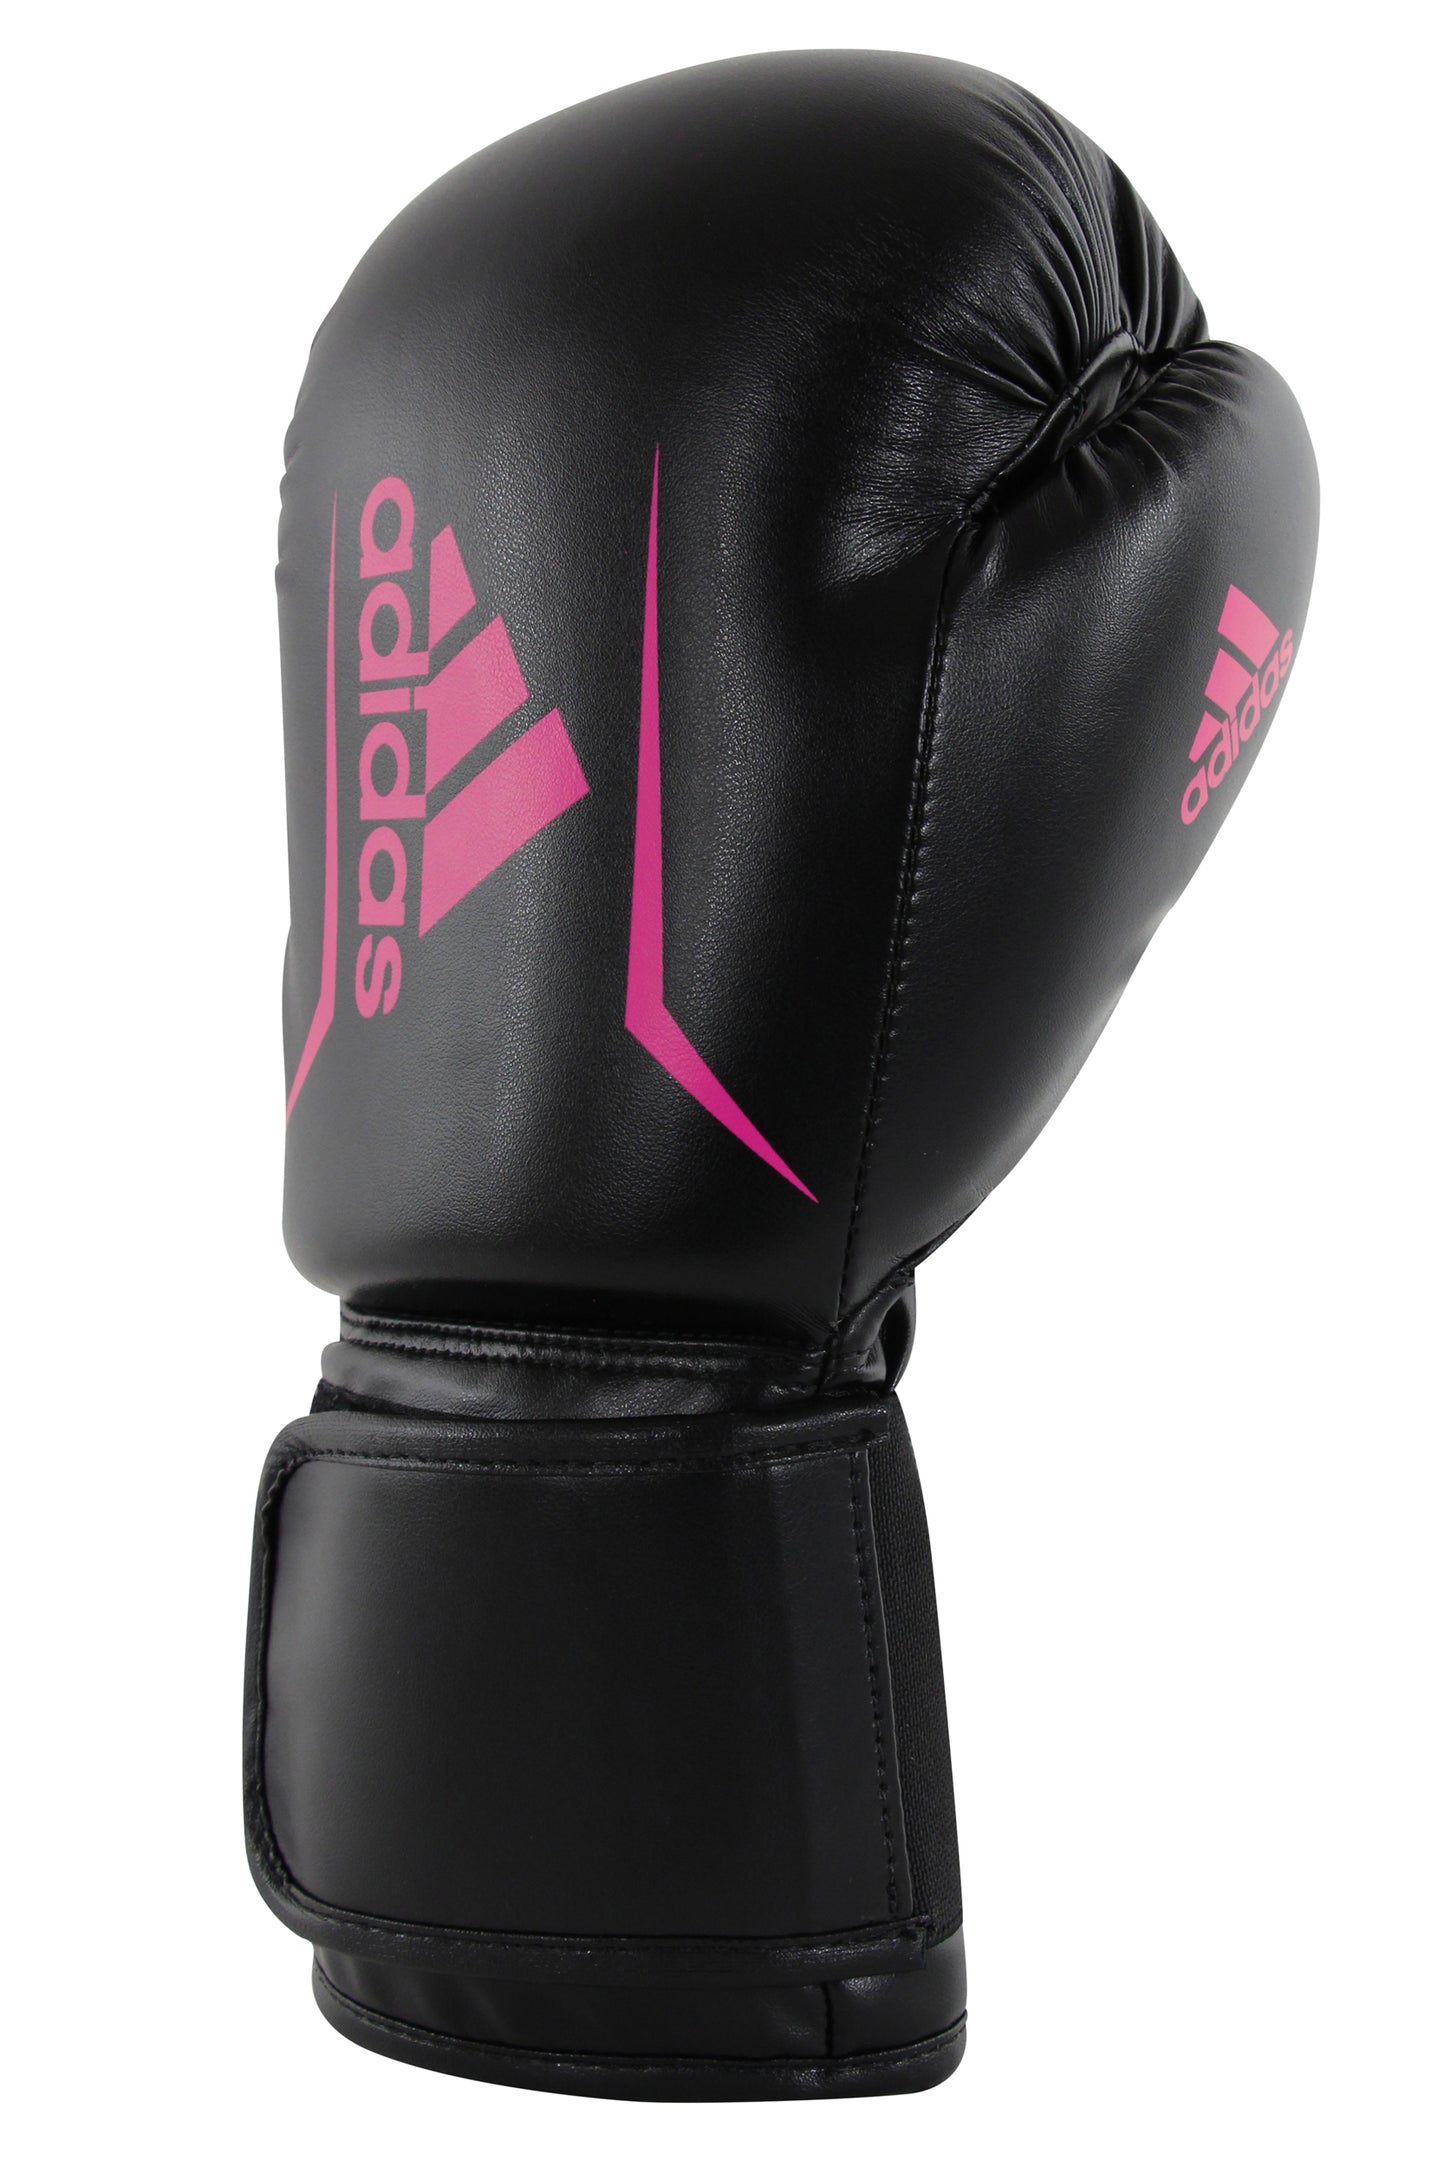 Gants de boxe Adidas Speed 50 - Noir/Rose